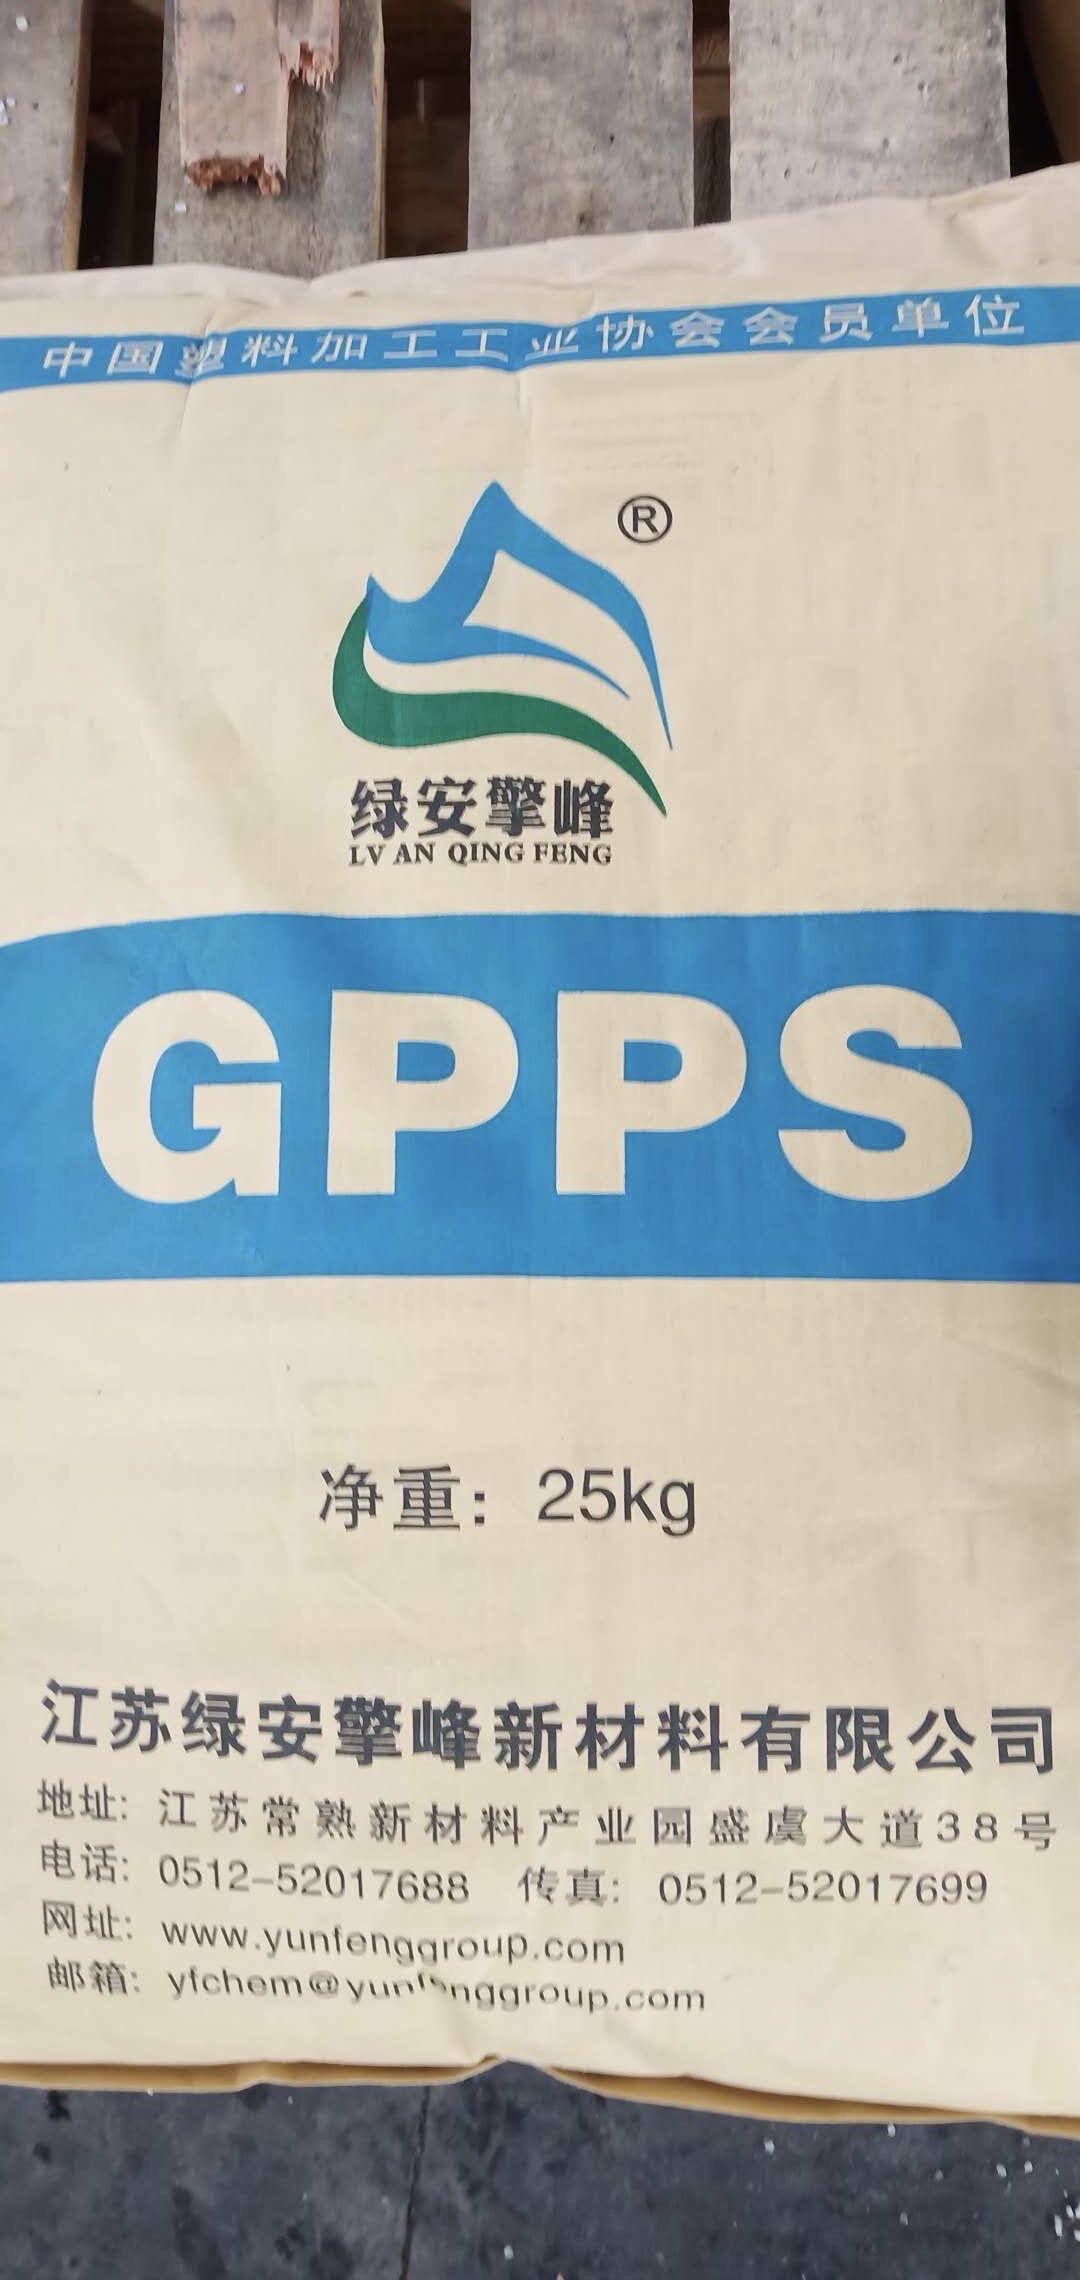 GPPS 绿安擎峰 GP-525  透明级